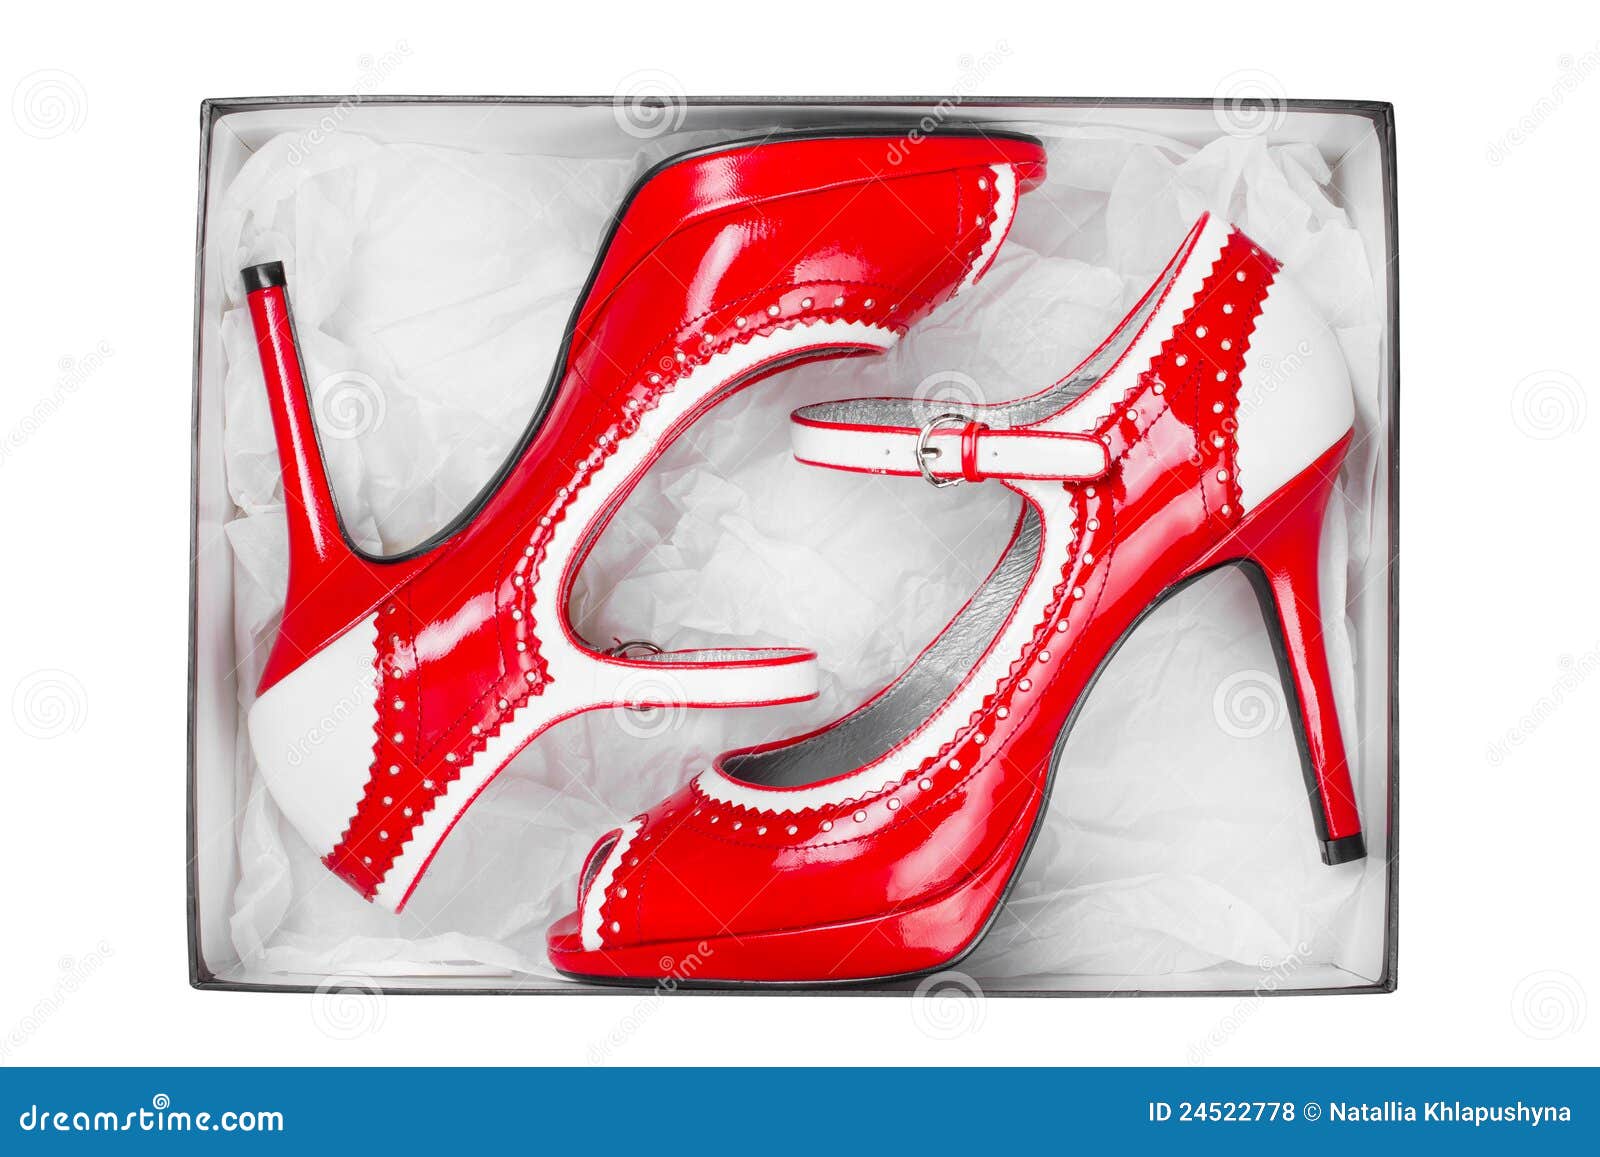 Matching heels & purse set | Purses, Heels, Wedding shoe